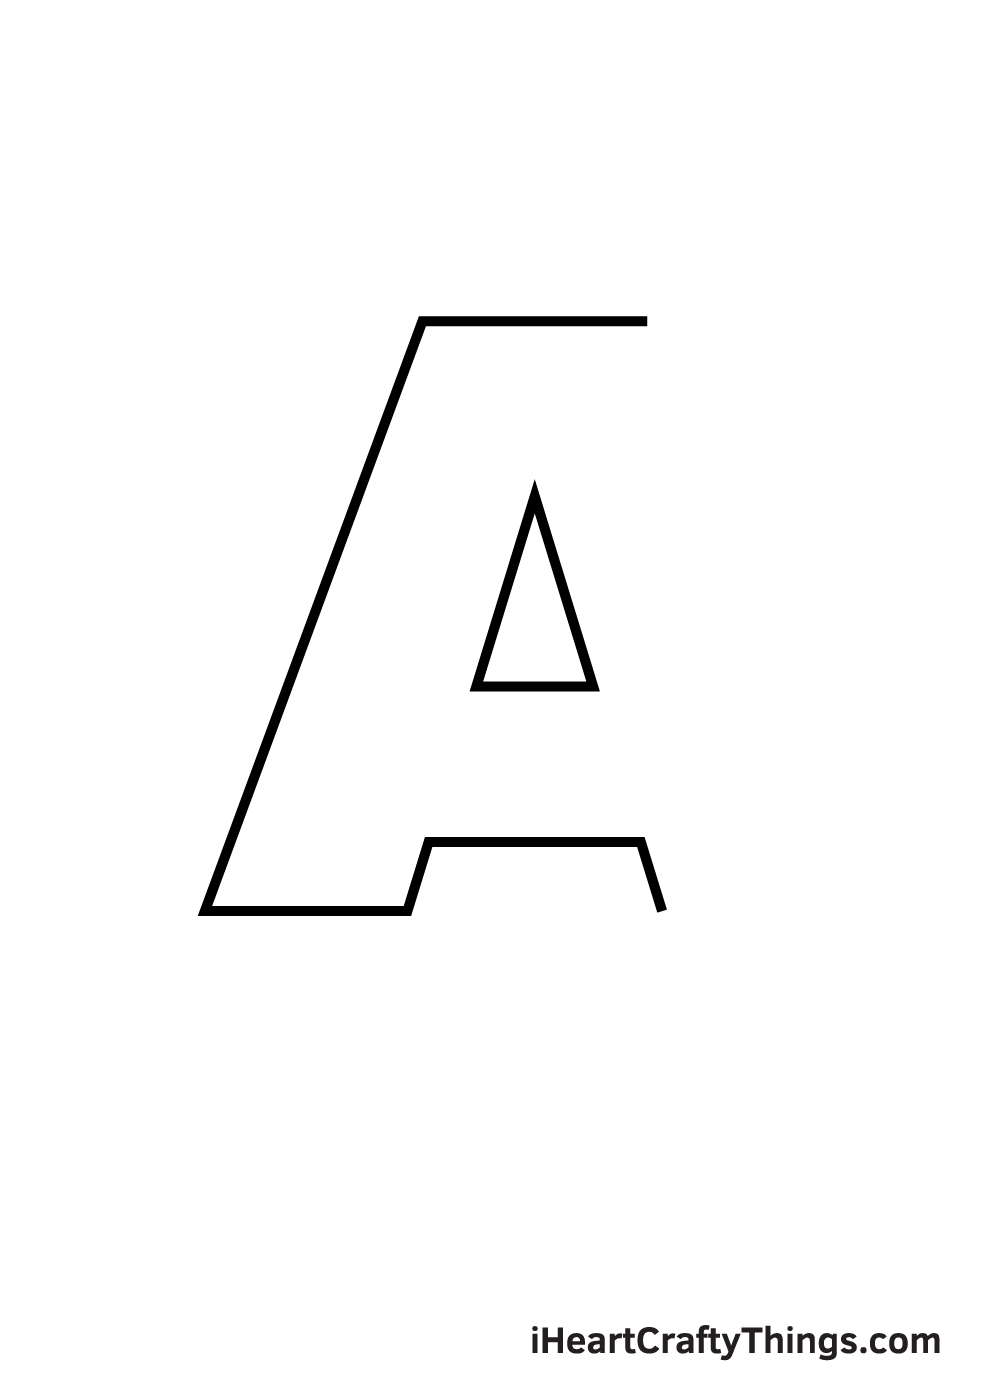 Alphabet Letters stock illustration. Illustration of graphic - 36890820